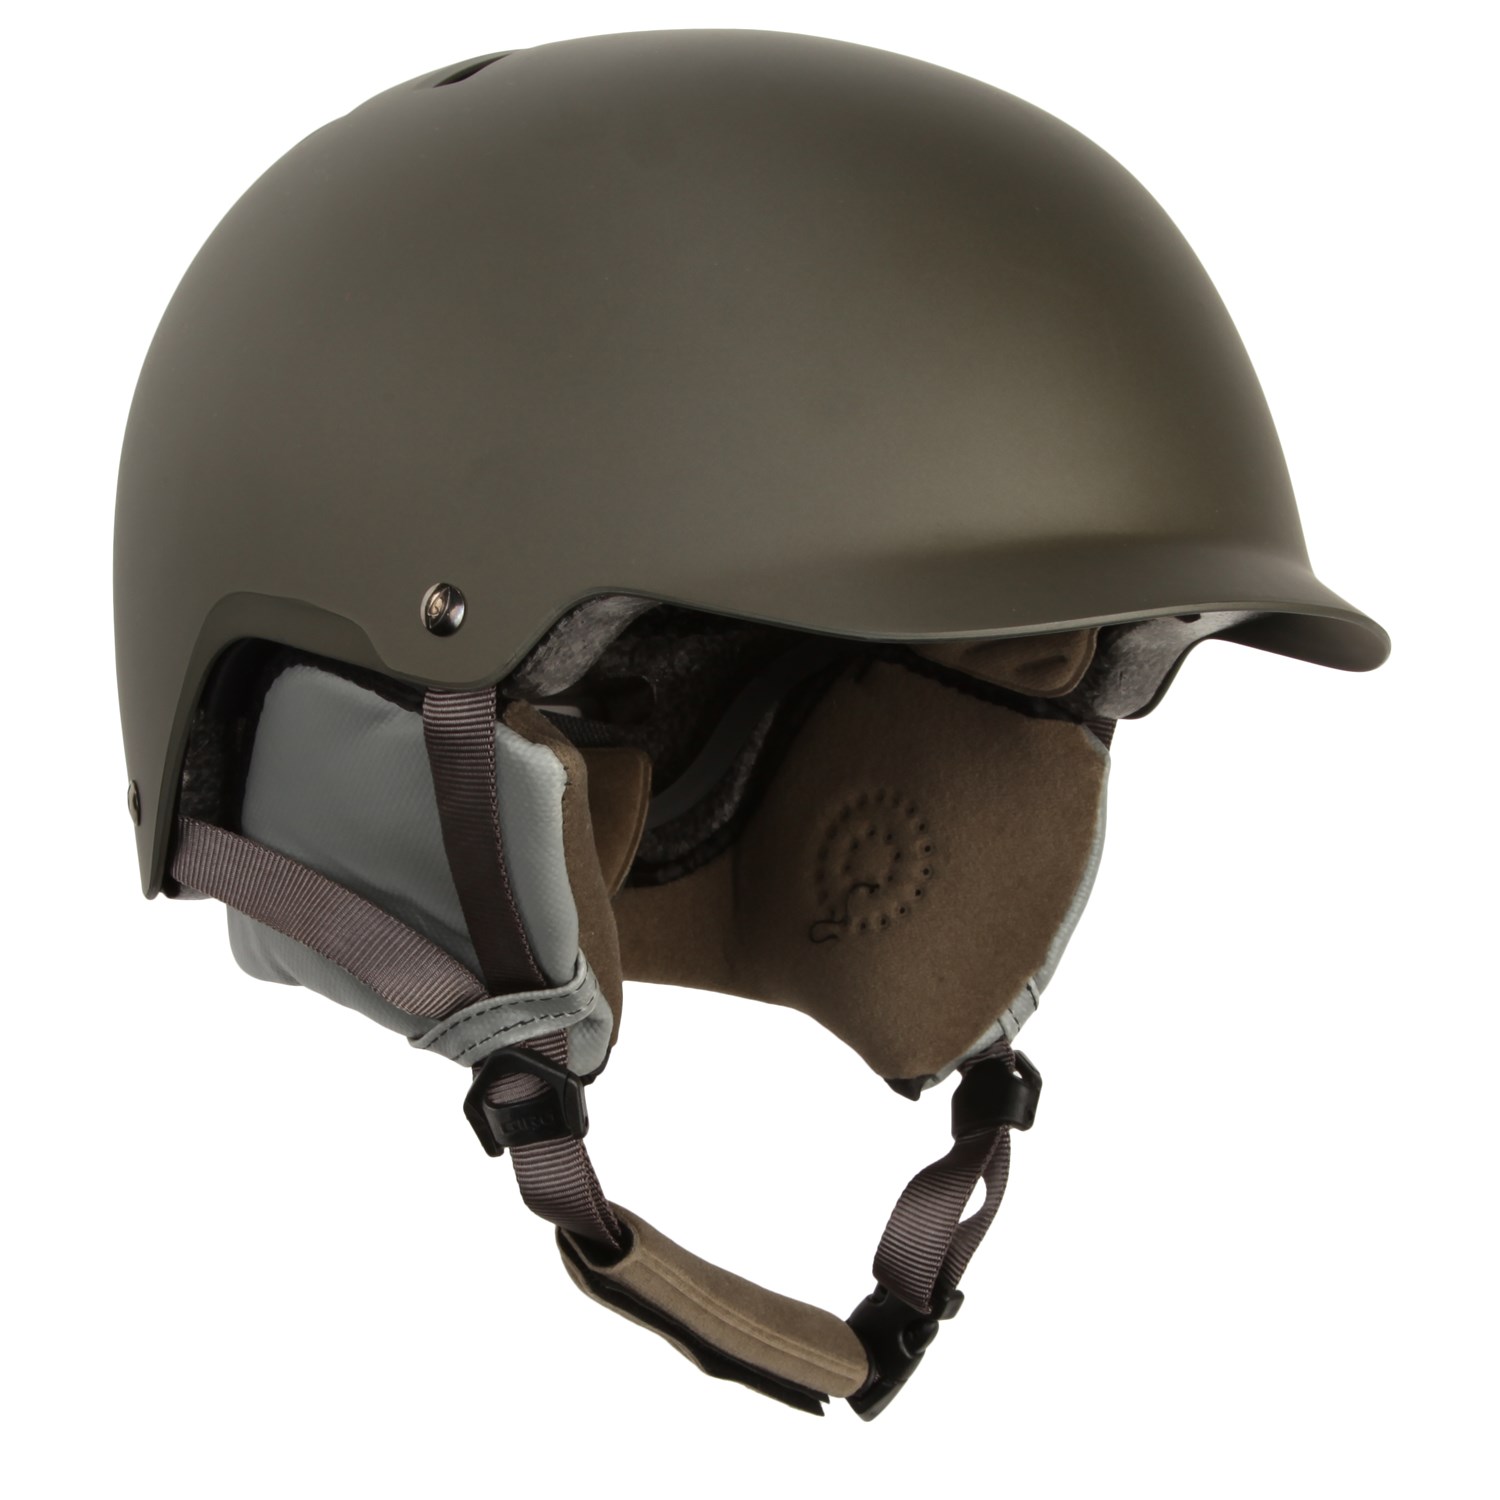 Giro Surface S Helmet on Sale, 57% OFF | www.ingeniovirtual.com